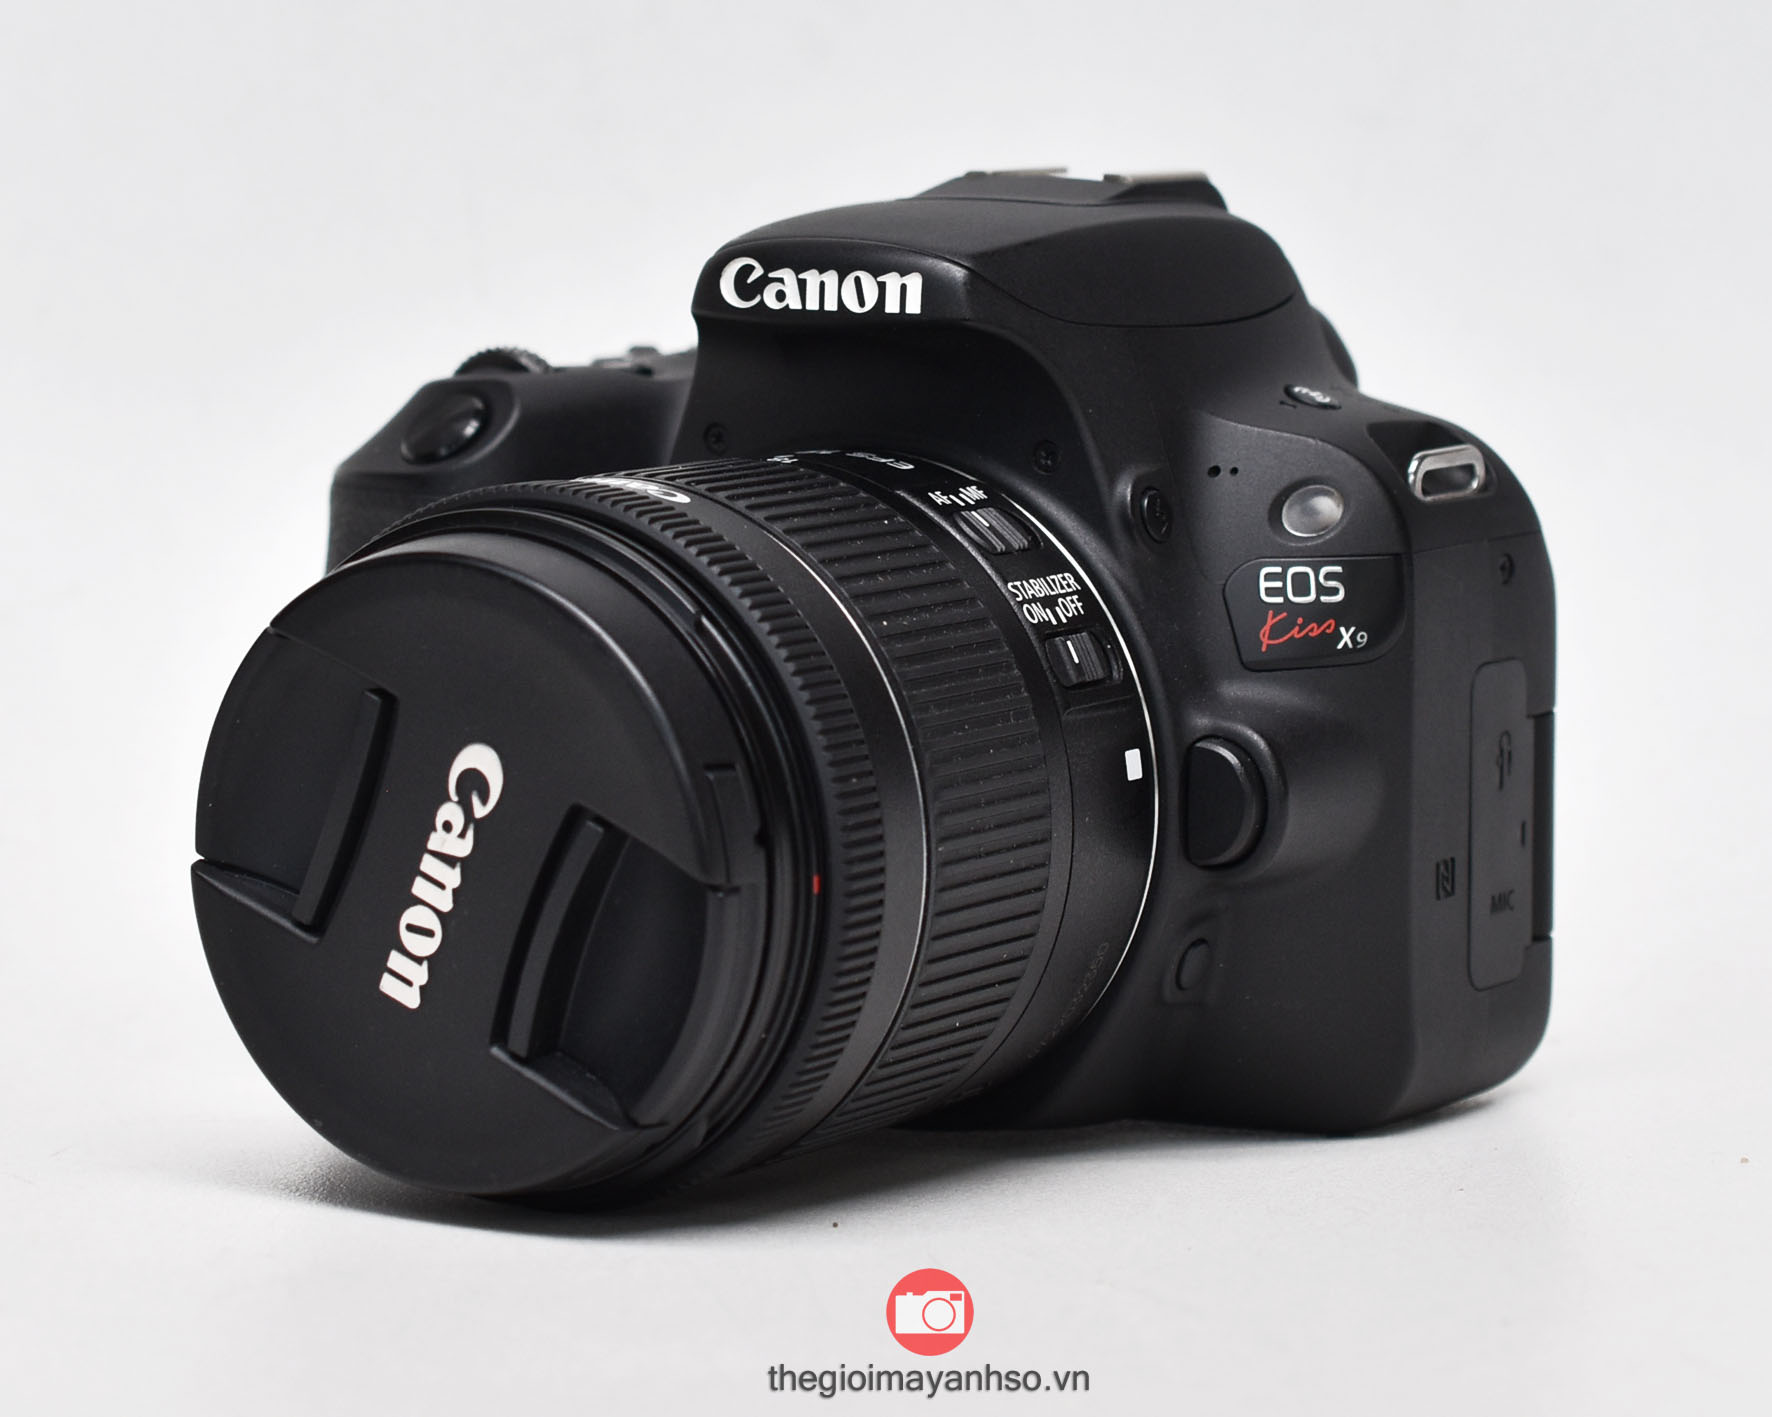 Canon EOS 200D kit 18-55mm f4-5.6 STM